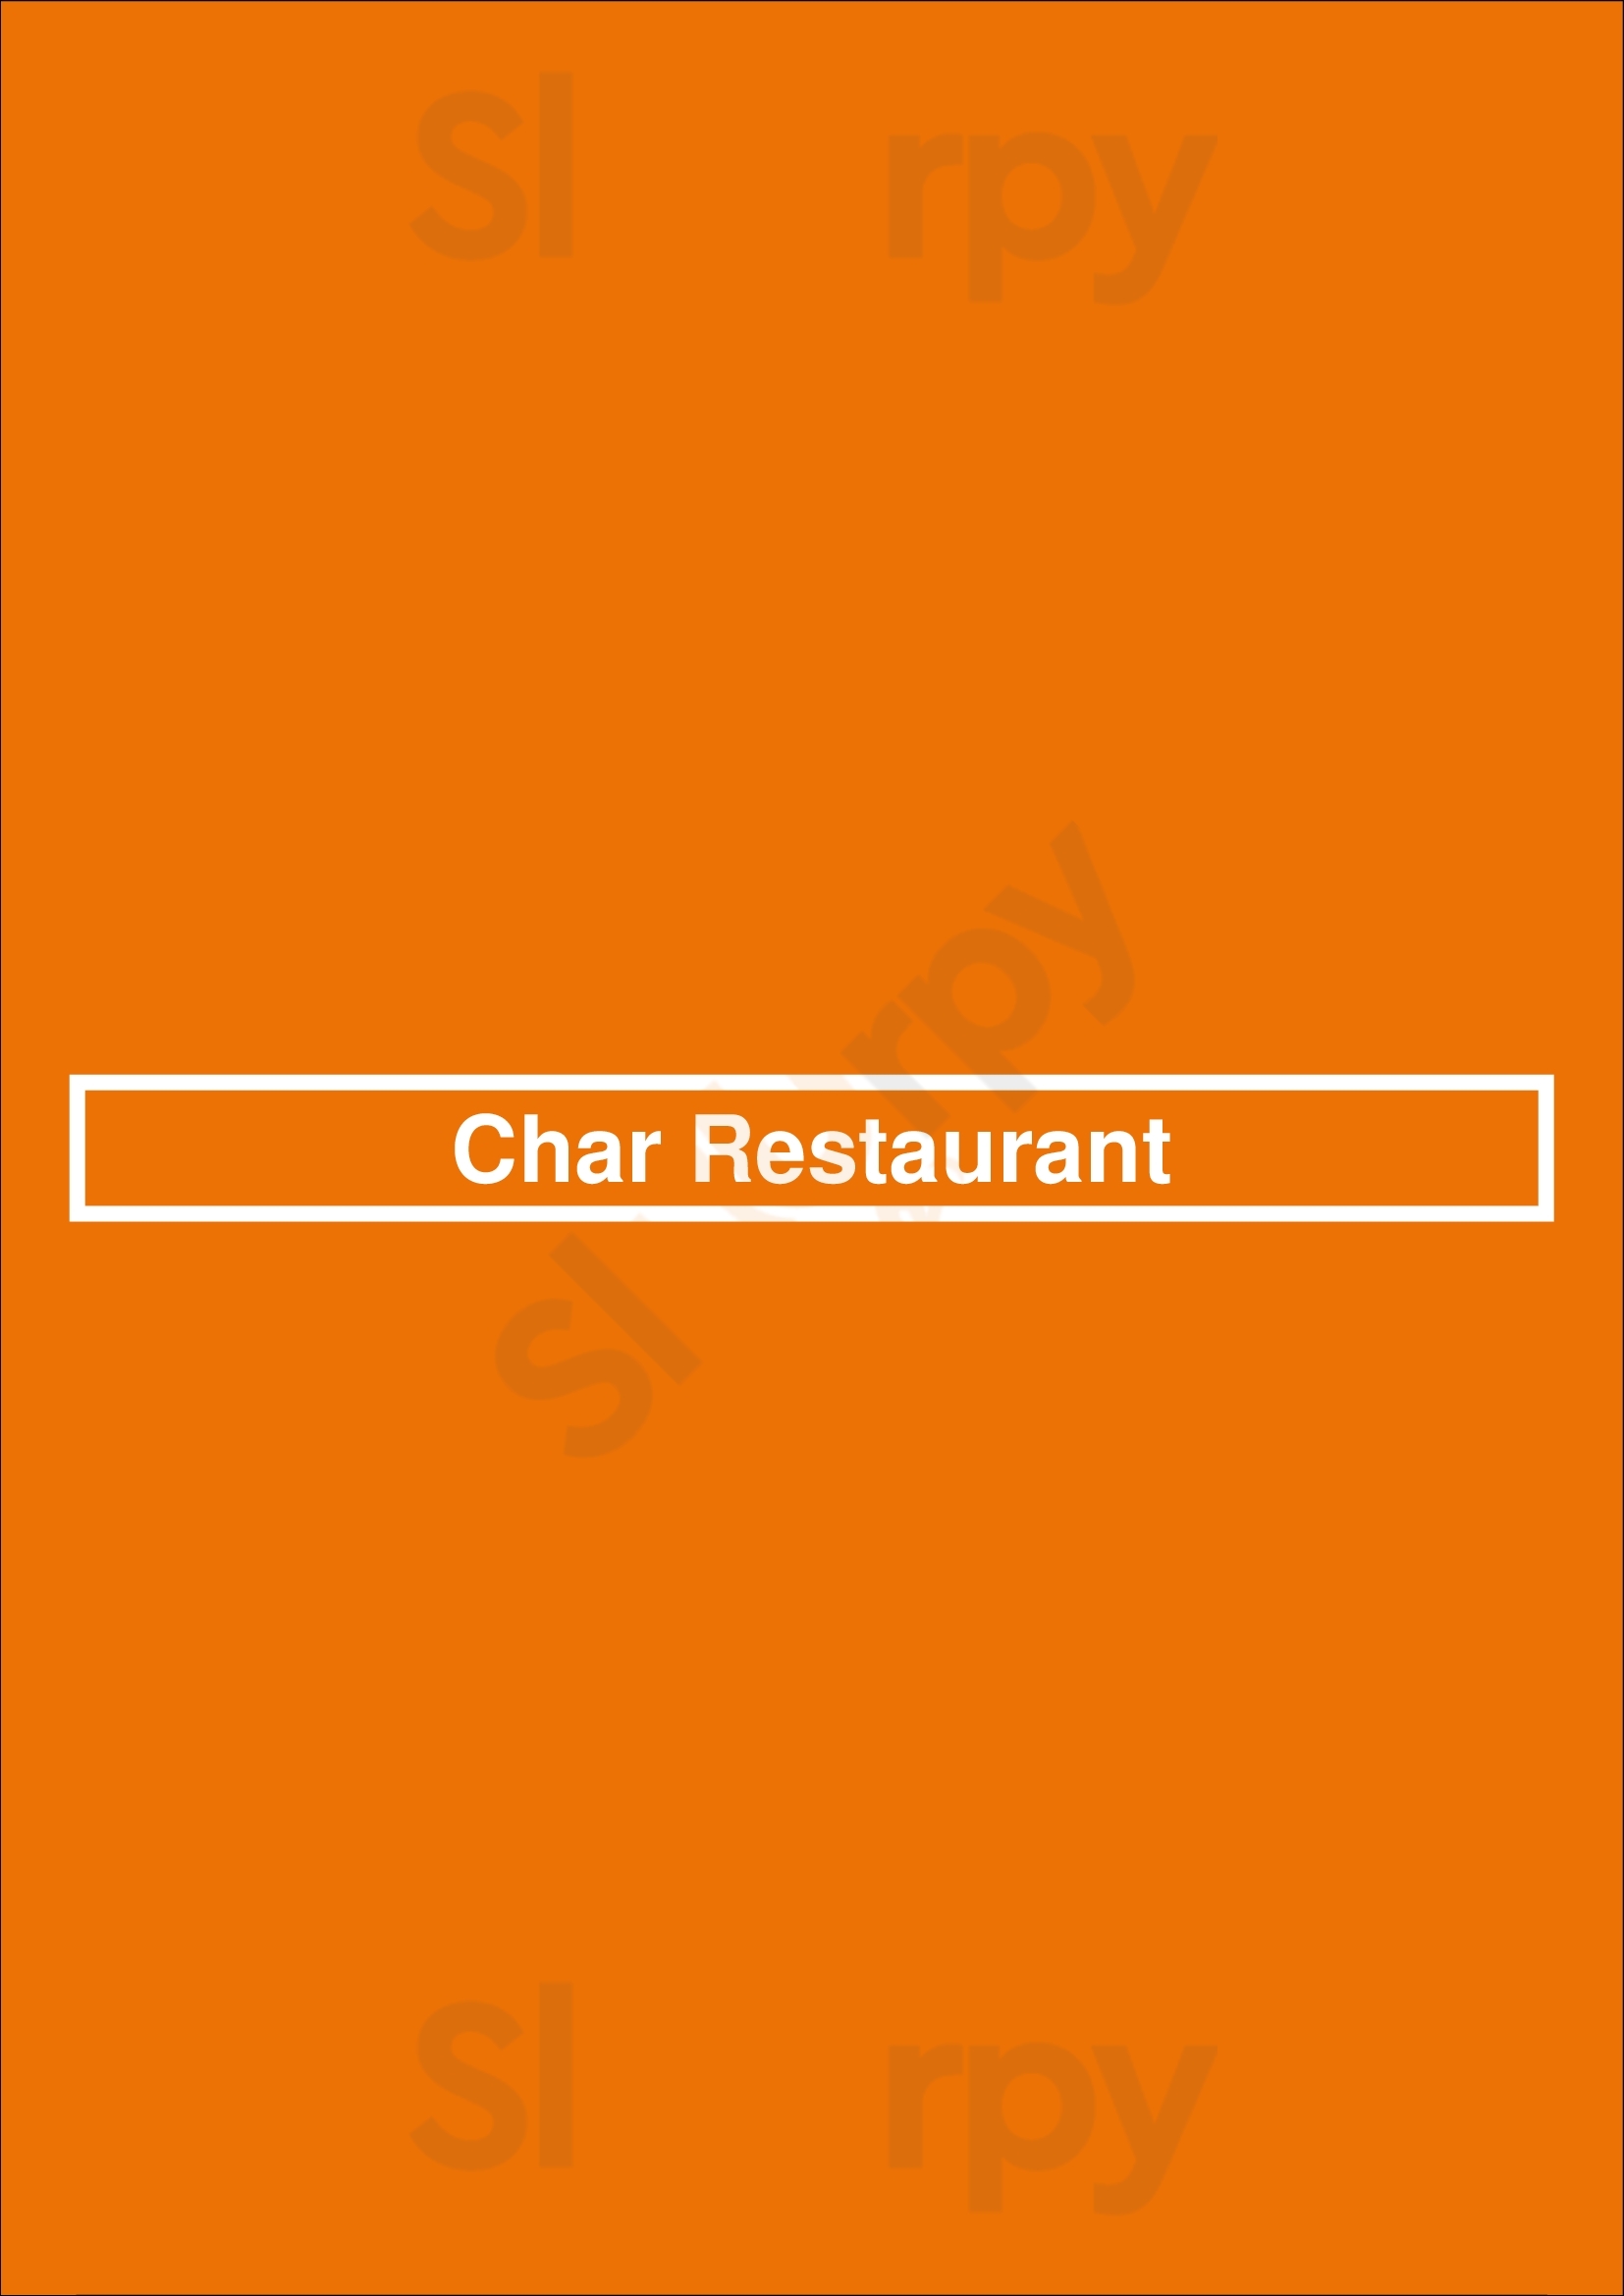 Char Restaurant Darwin Menu - 1